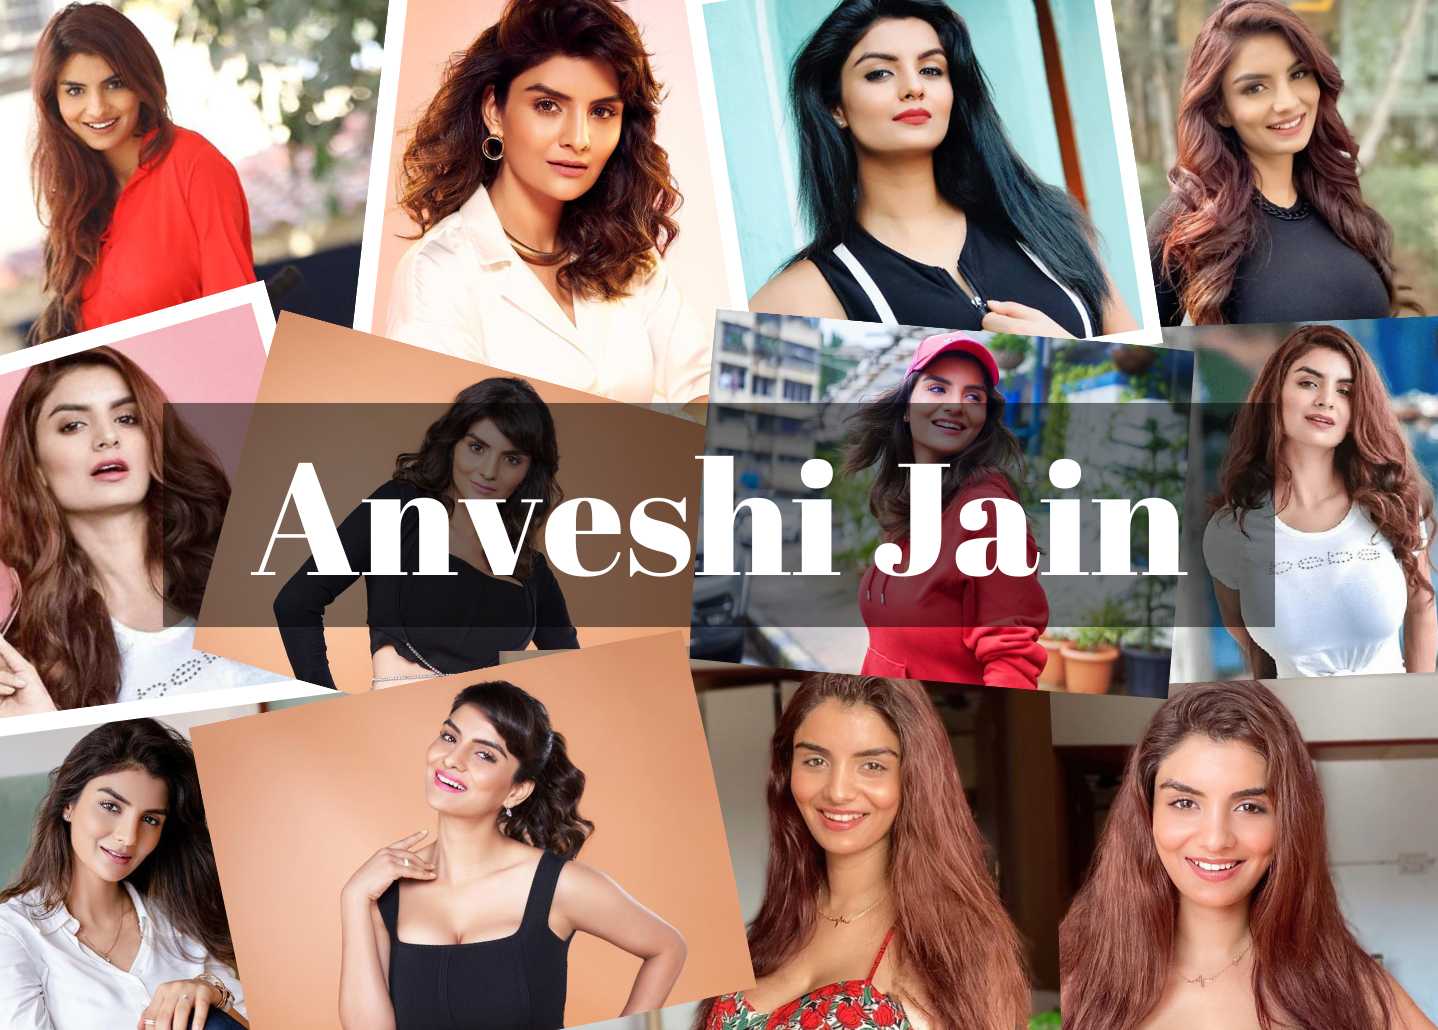 Anveshi Full Hd Porn Tube - Anveshi Jain Age Husband Boyfriend Marriage Education